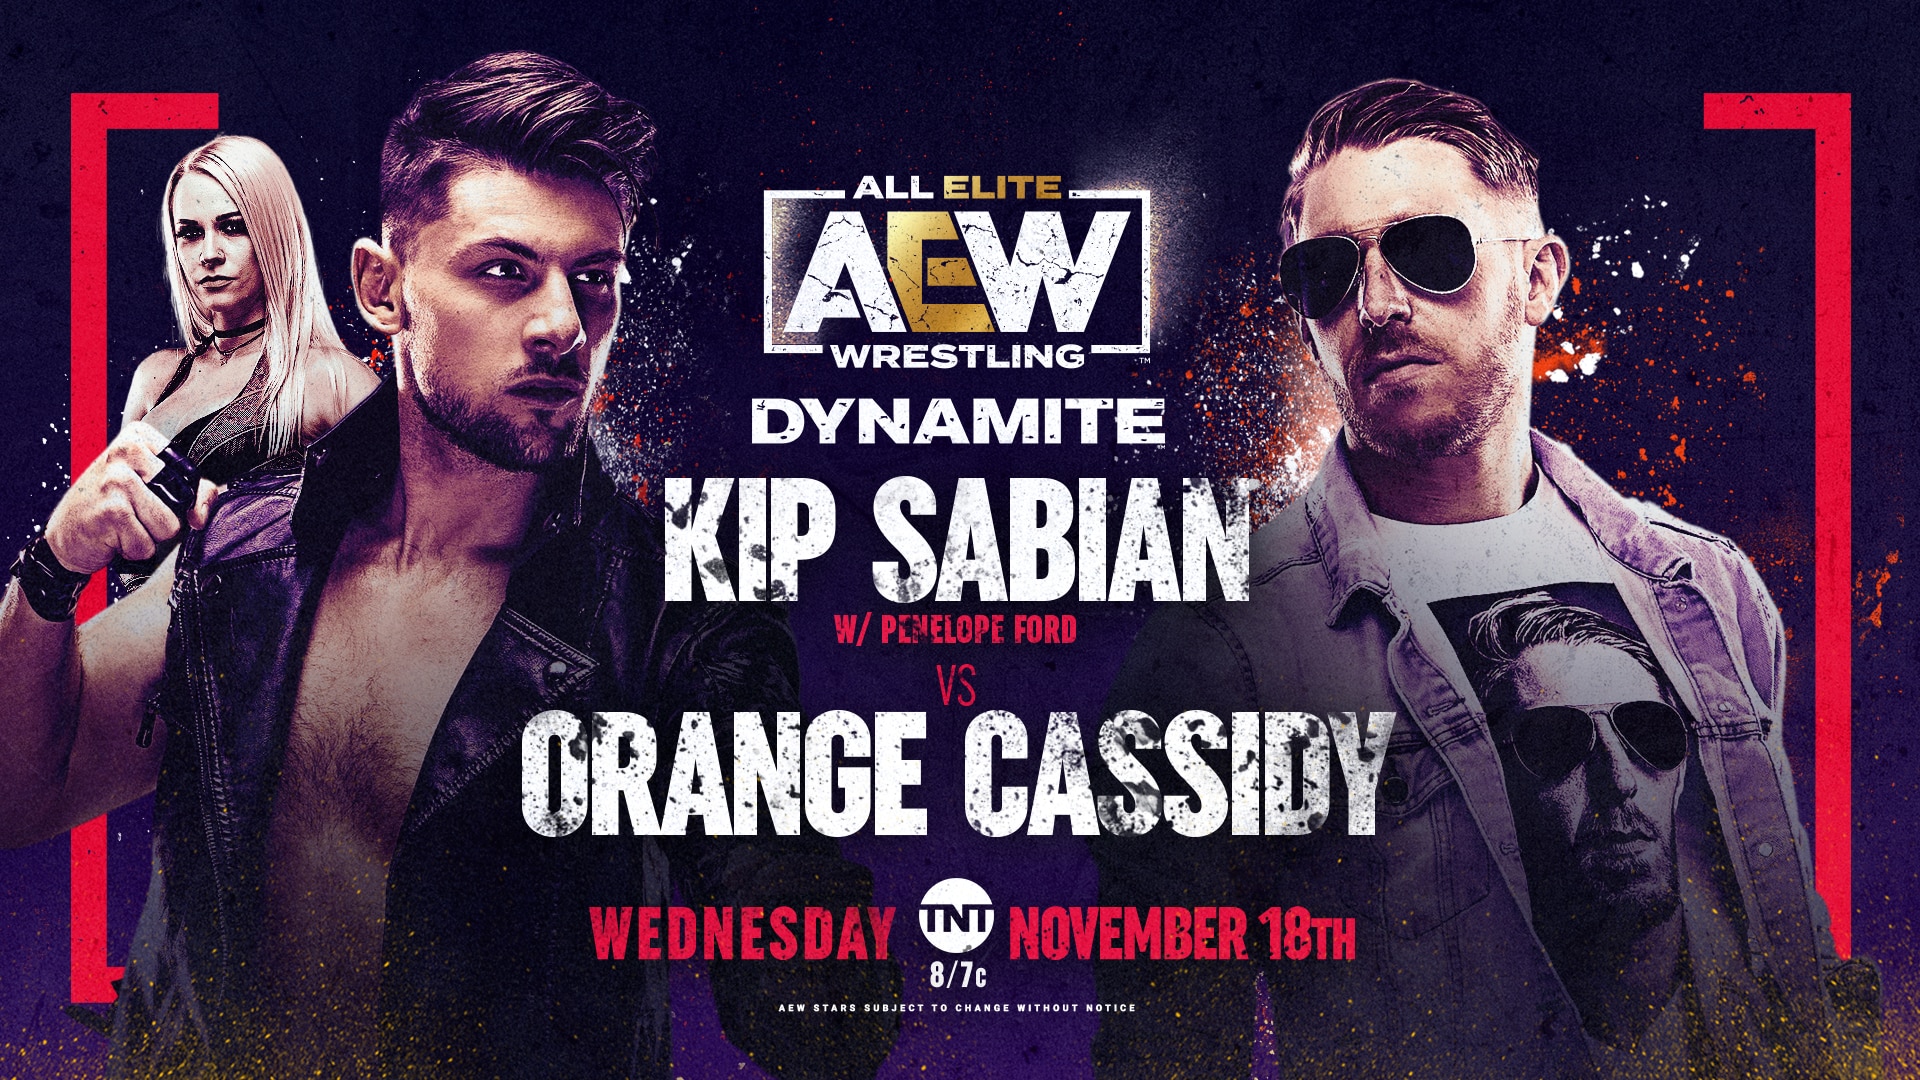 Kip Sabian vs Orange Cassidy